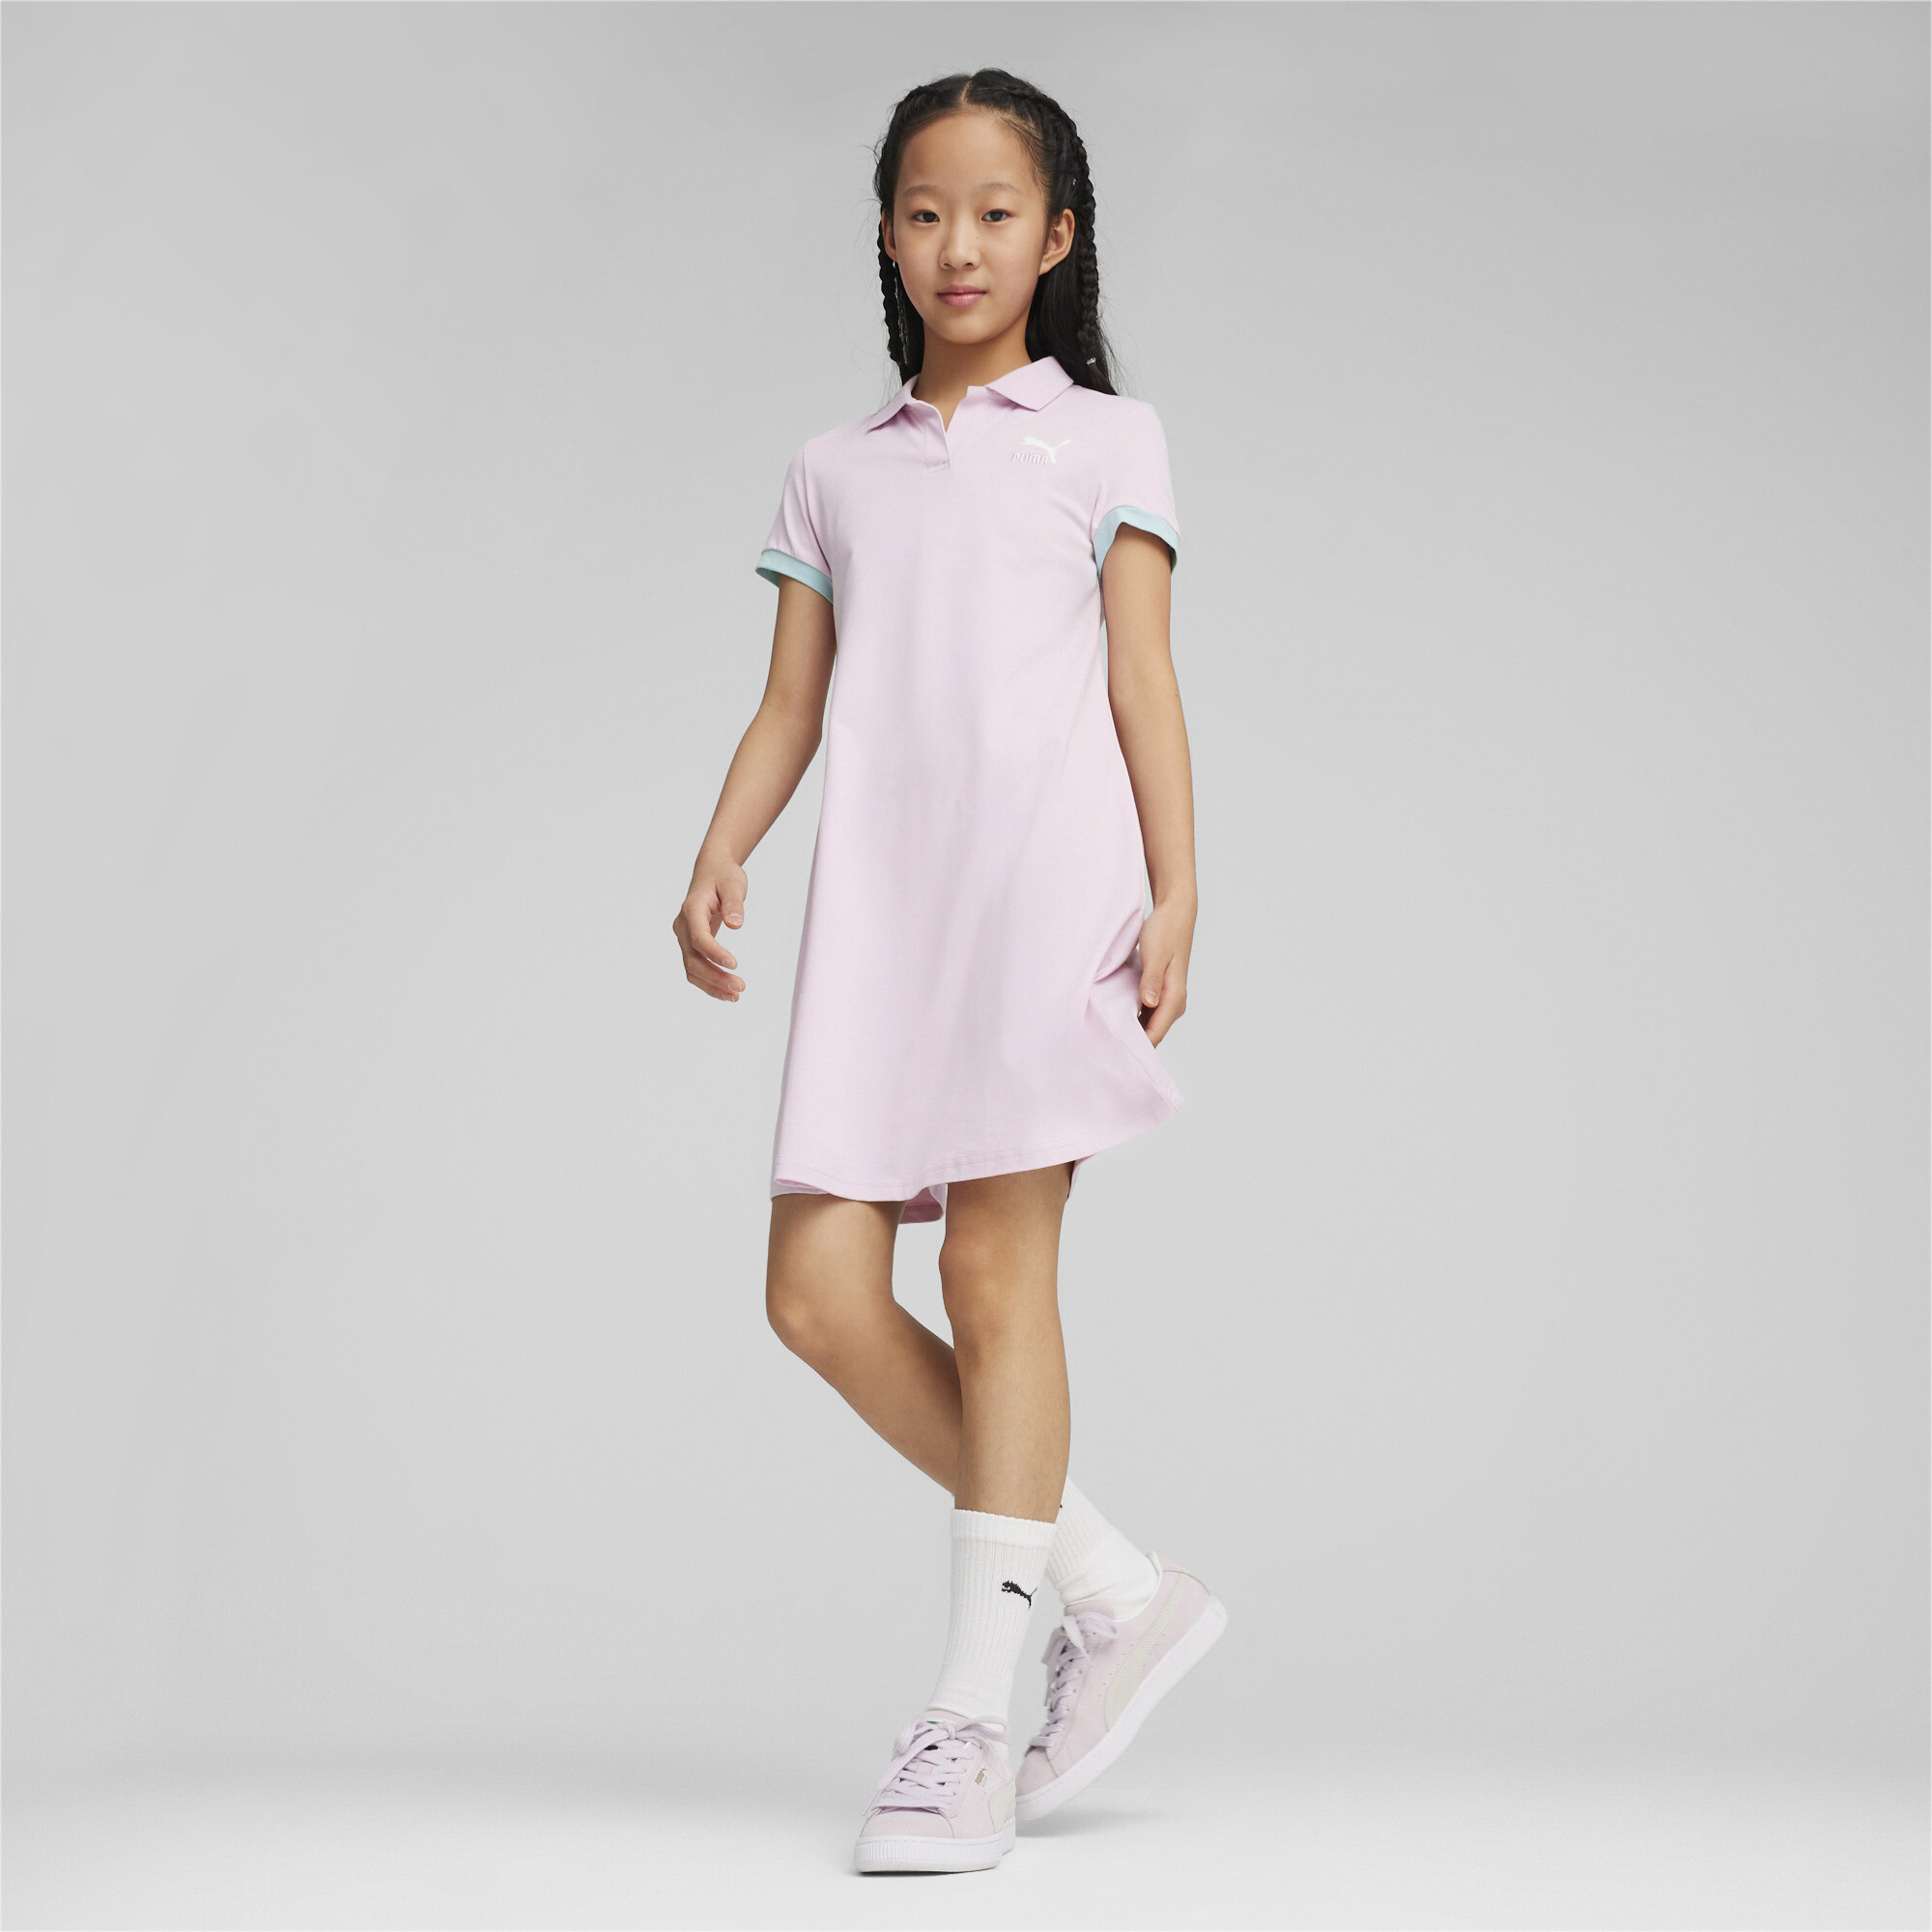 PUMA CLASSICS Match Point Dress In Purple, Size 11-12 Youth